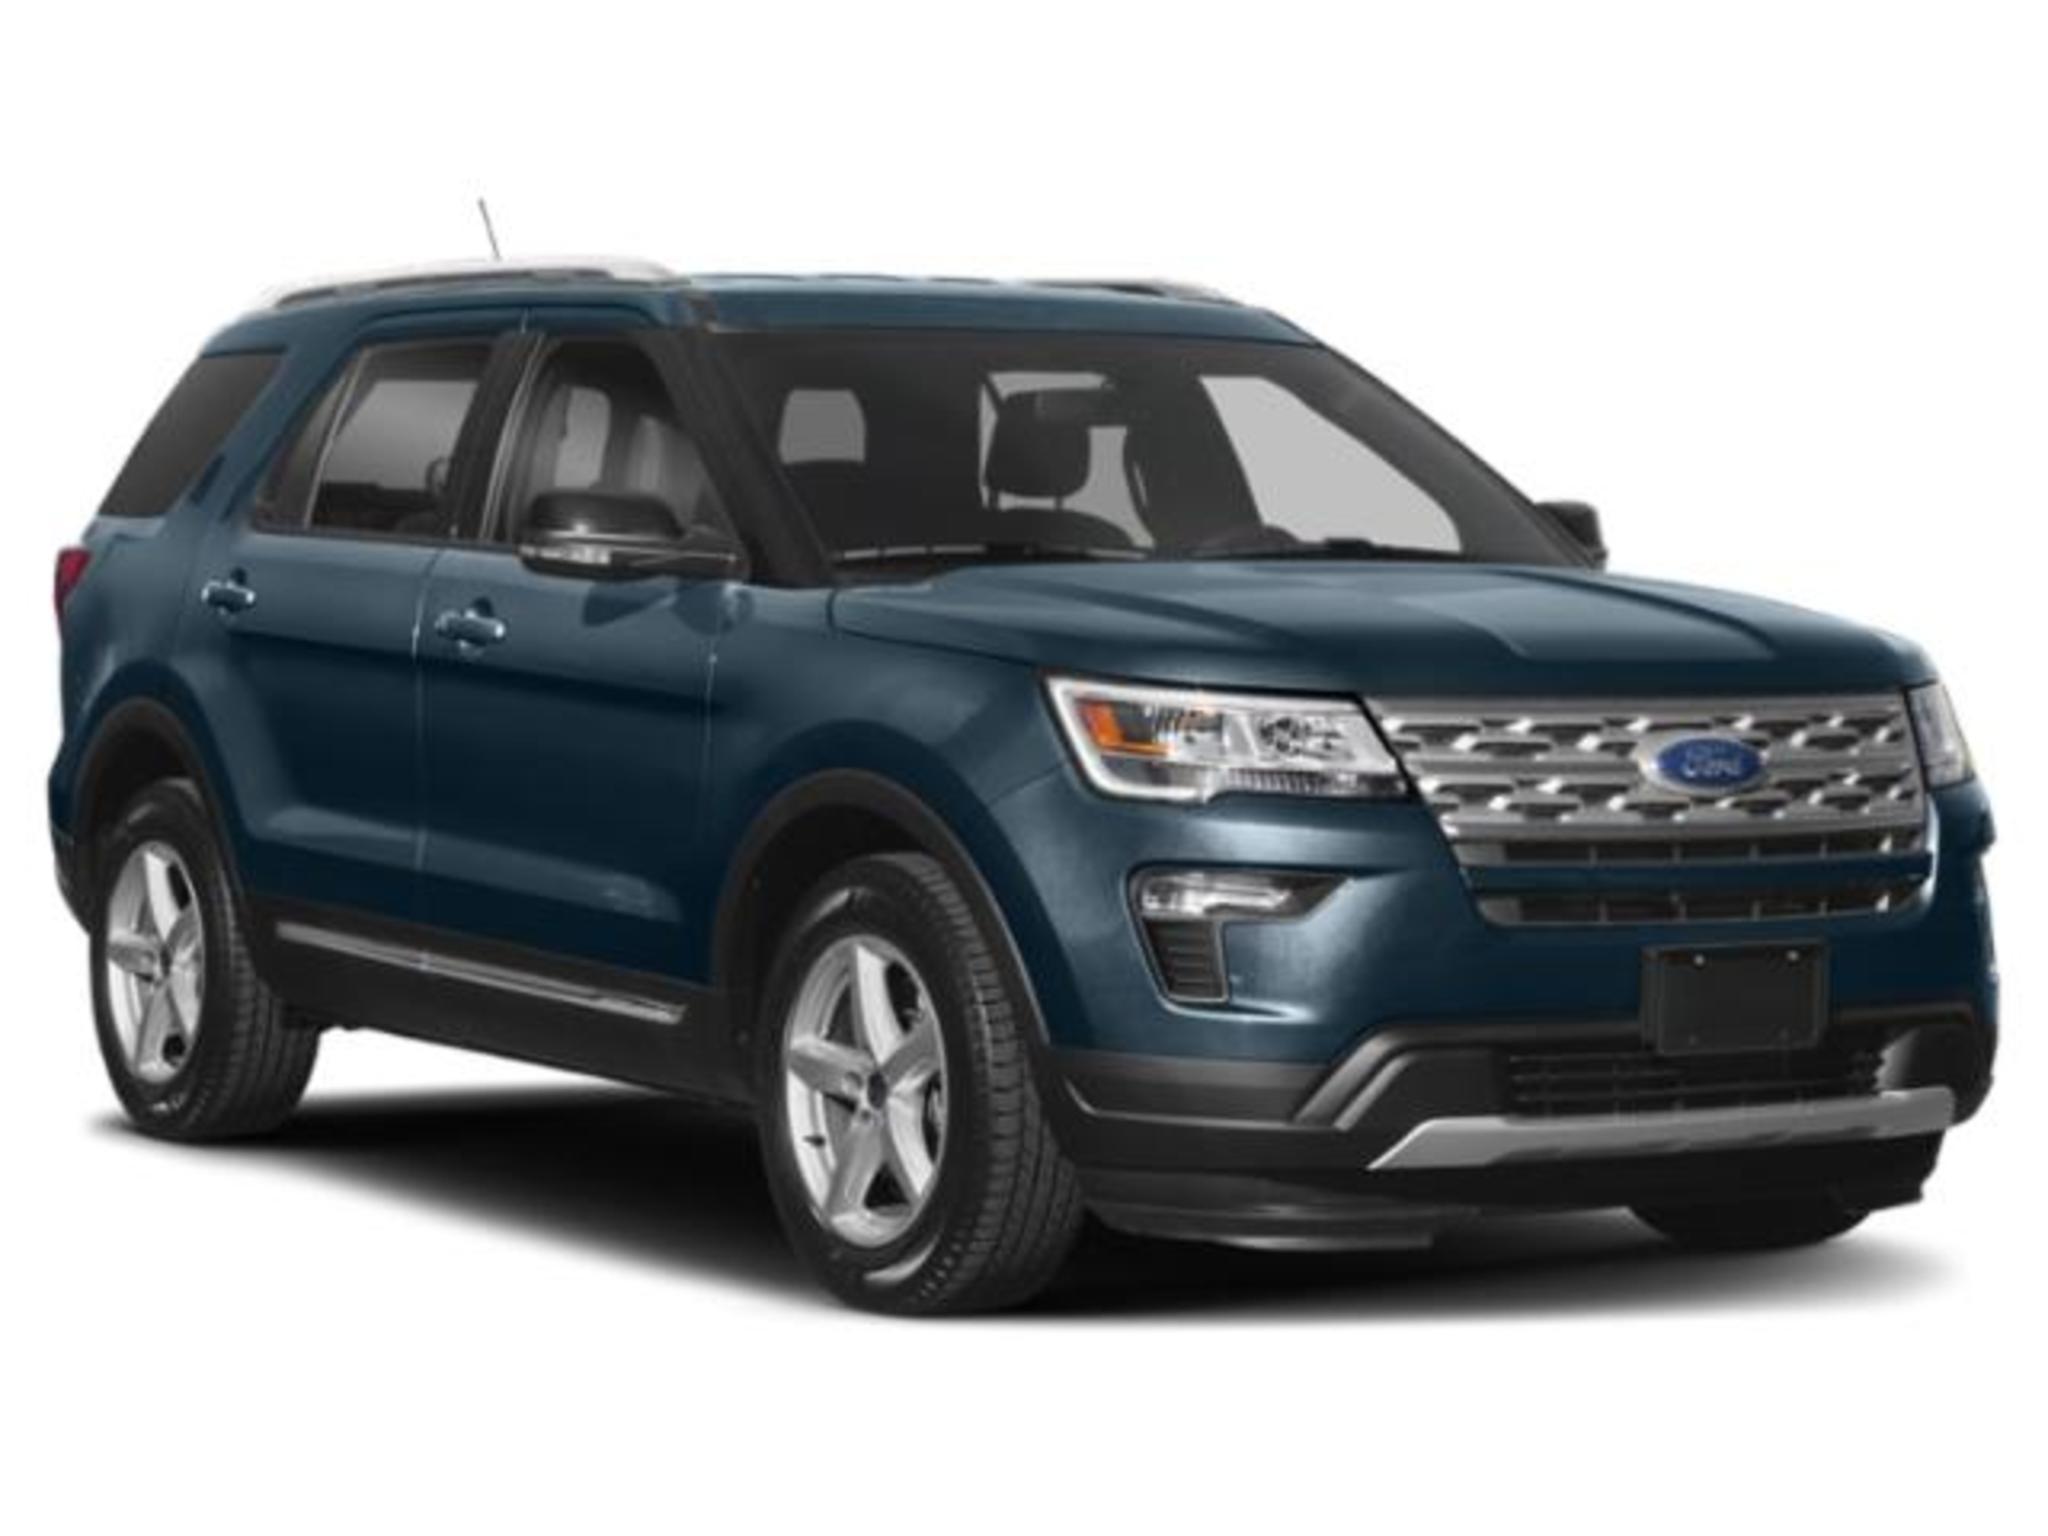 2019 Ford Explorer - Prices, Trims, Options, Specs, Photos, Reviews